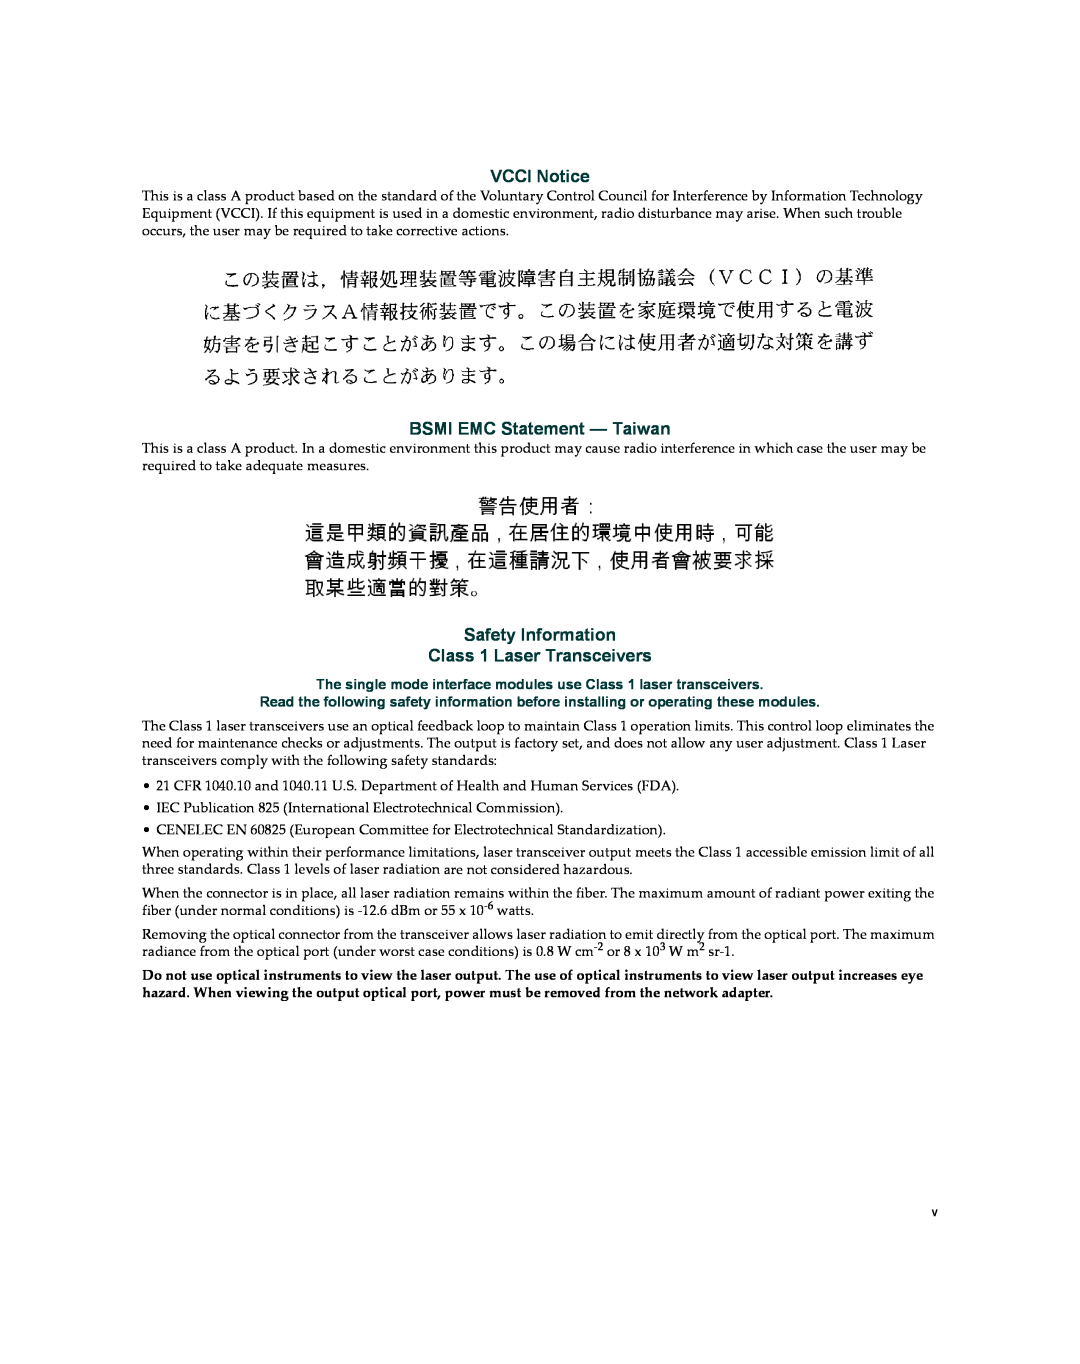 Enterasys Networks X009-U manual VCCI Notice, BSMI EMC Statement - Taiwan, Safety Information Class 1 Laser Transceivers 